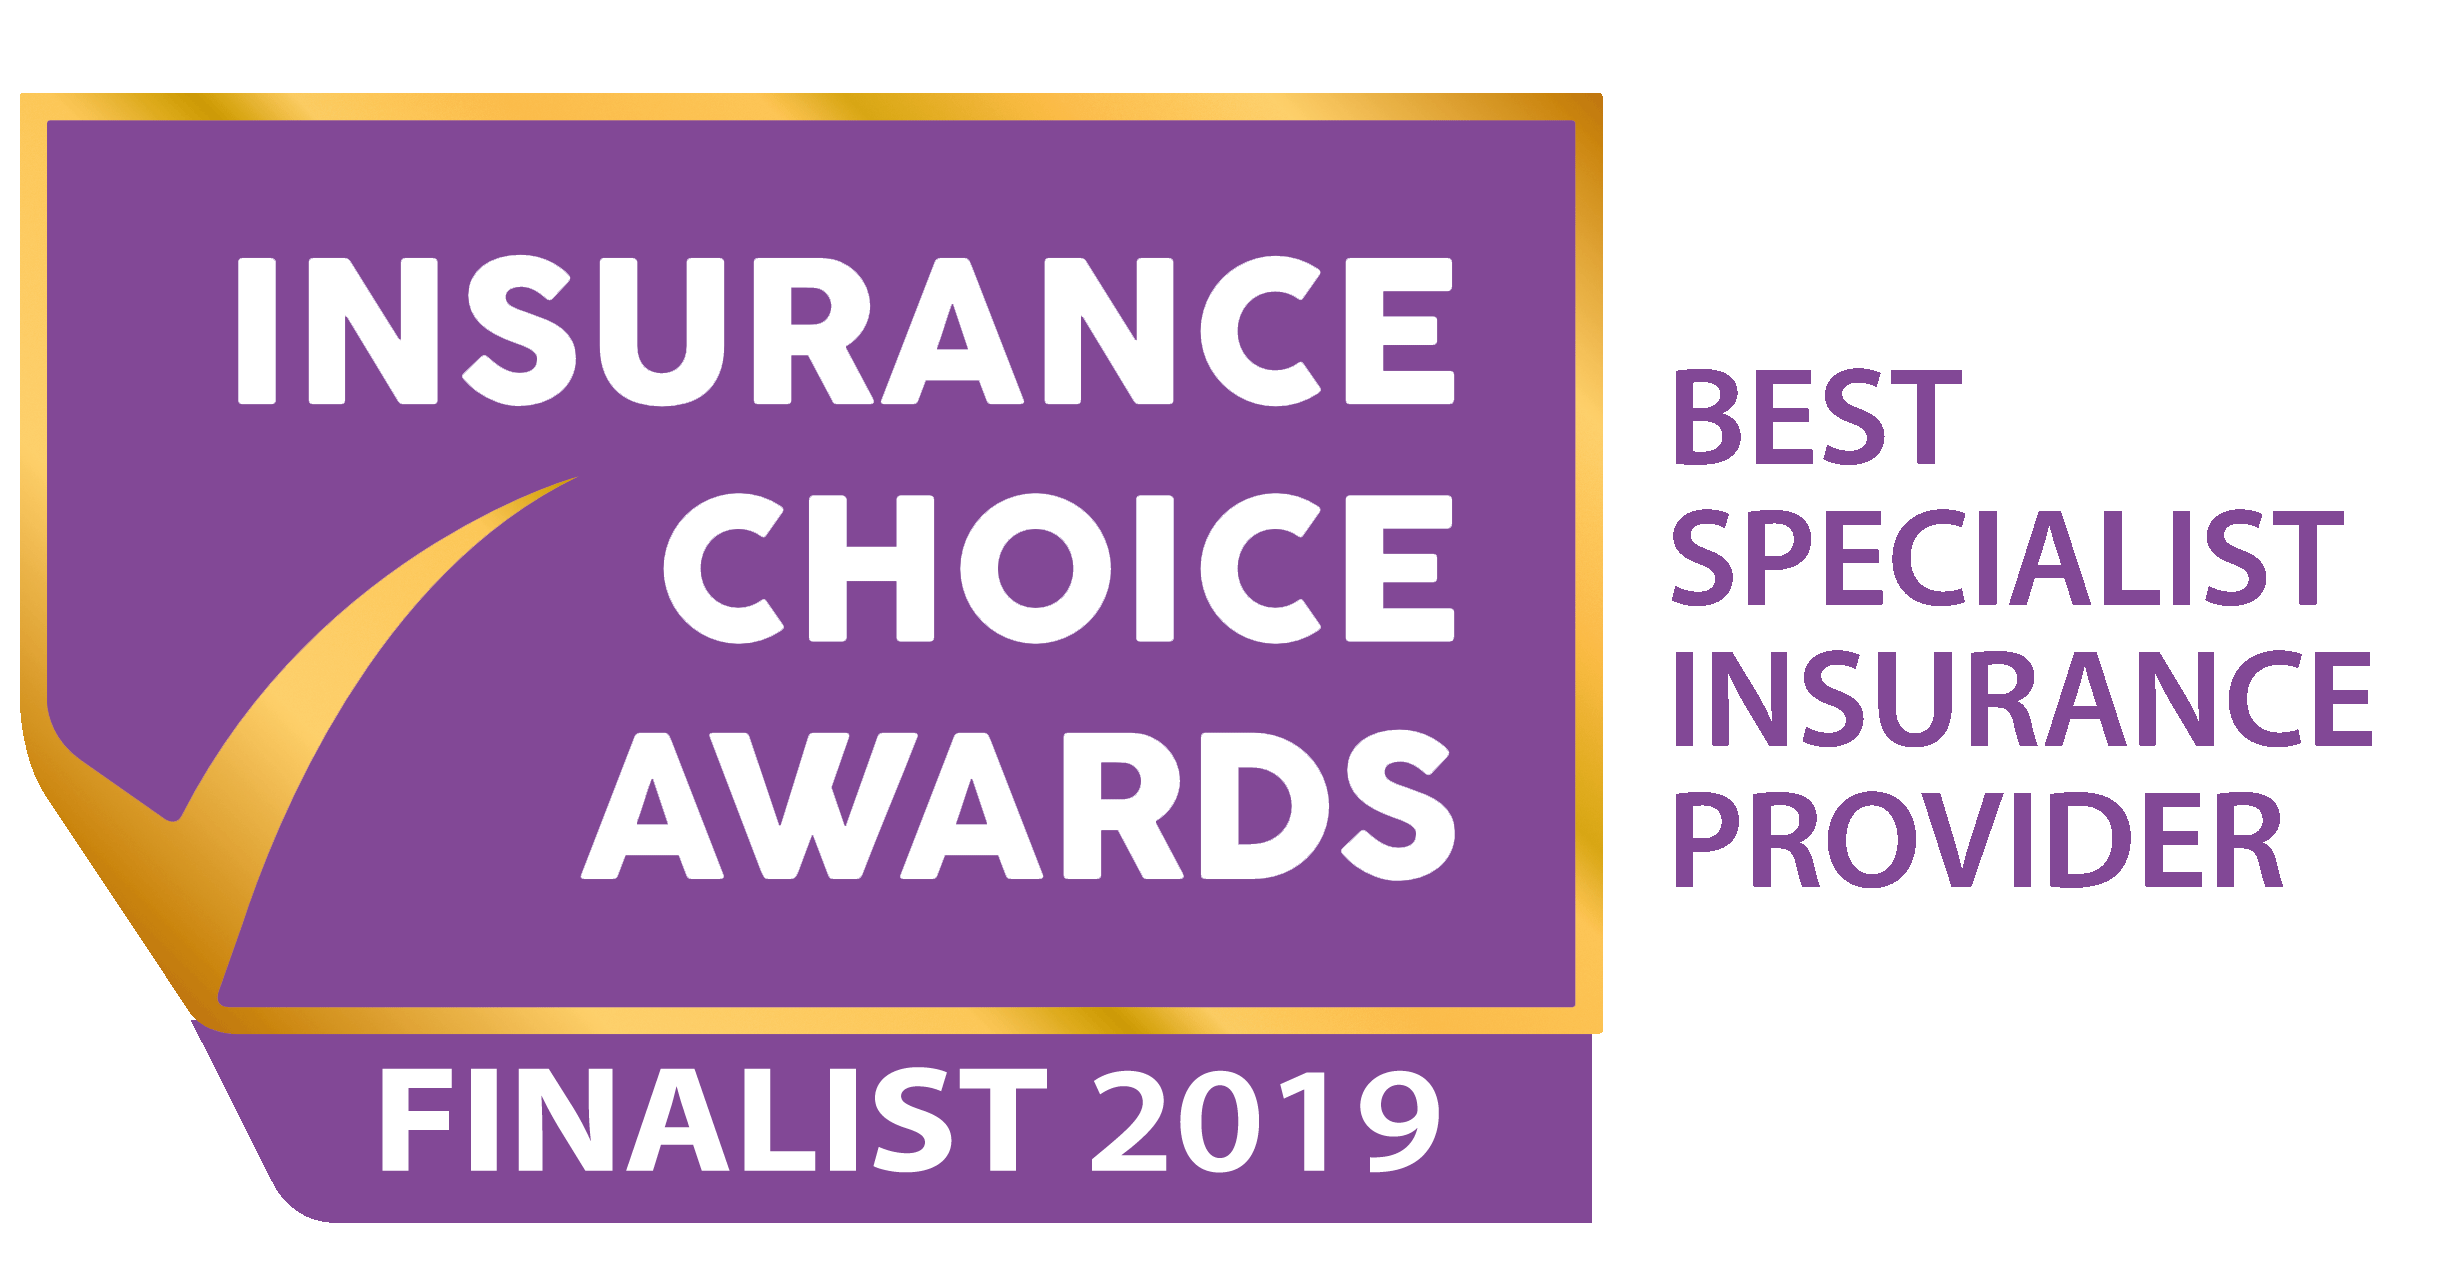 Insurance choice awards winner 2019